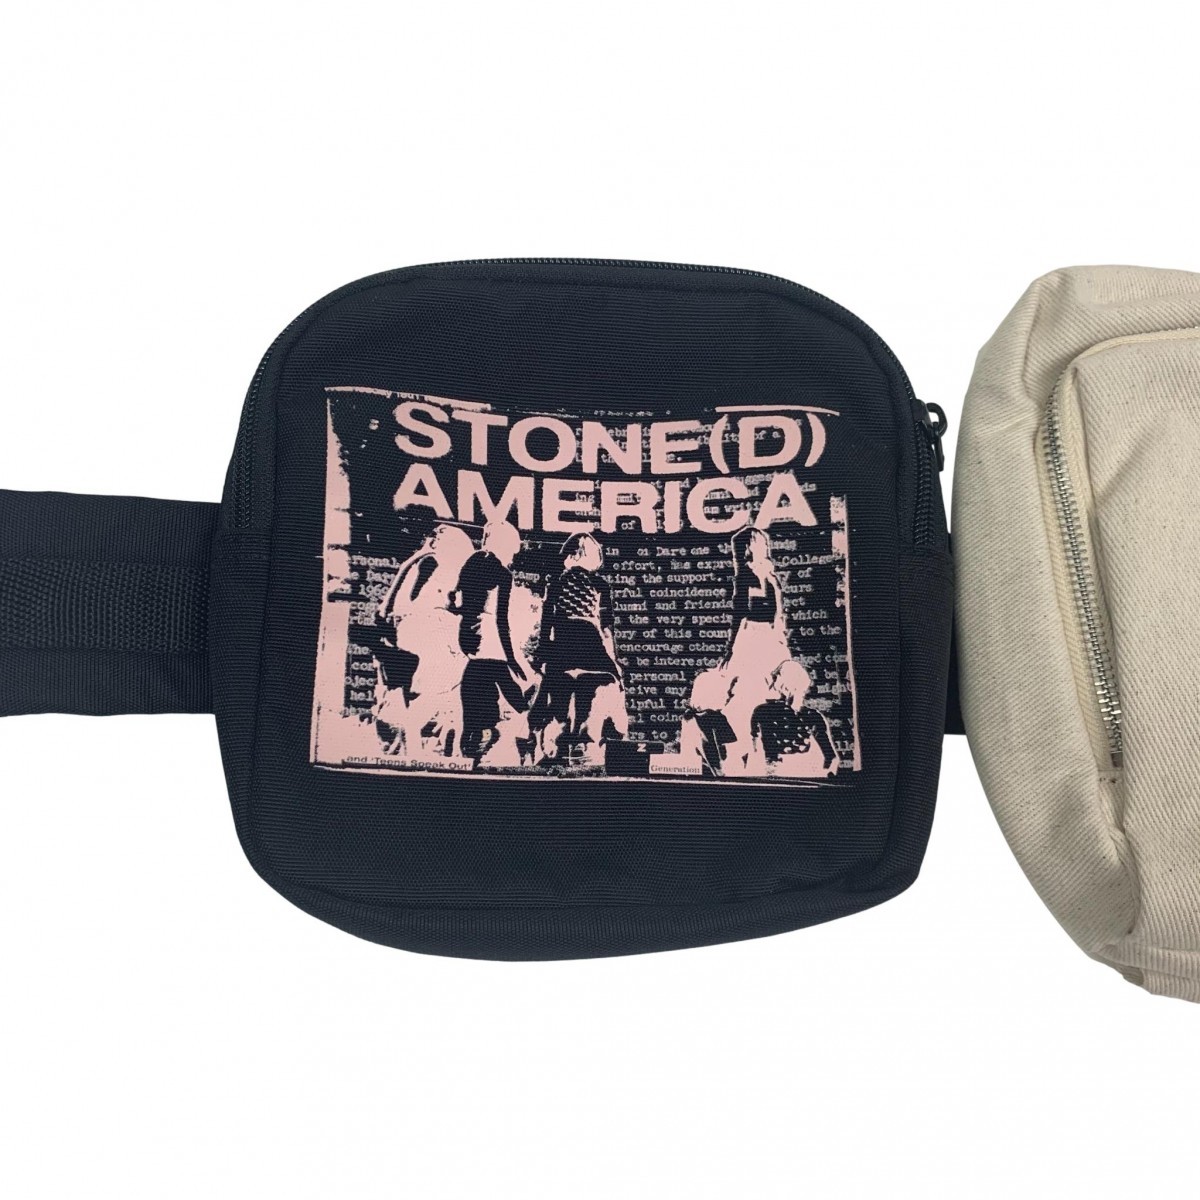 x Stoned America Crossbody Bag - 2